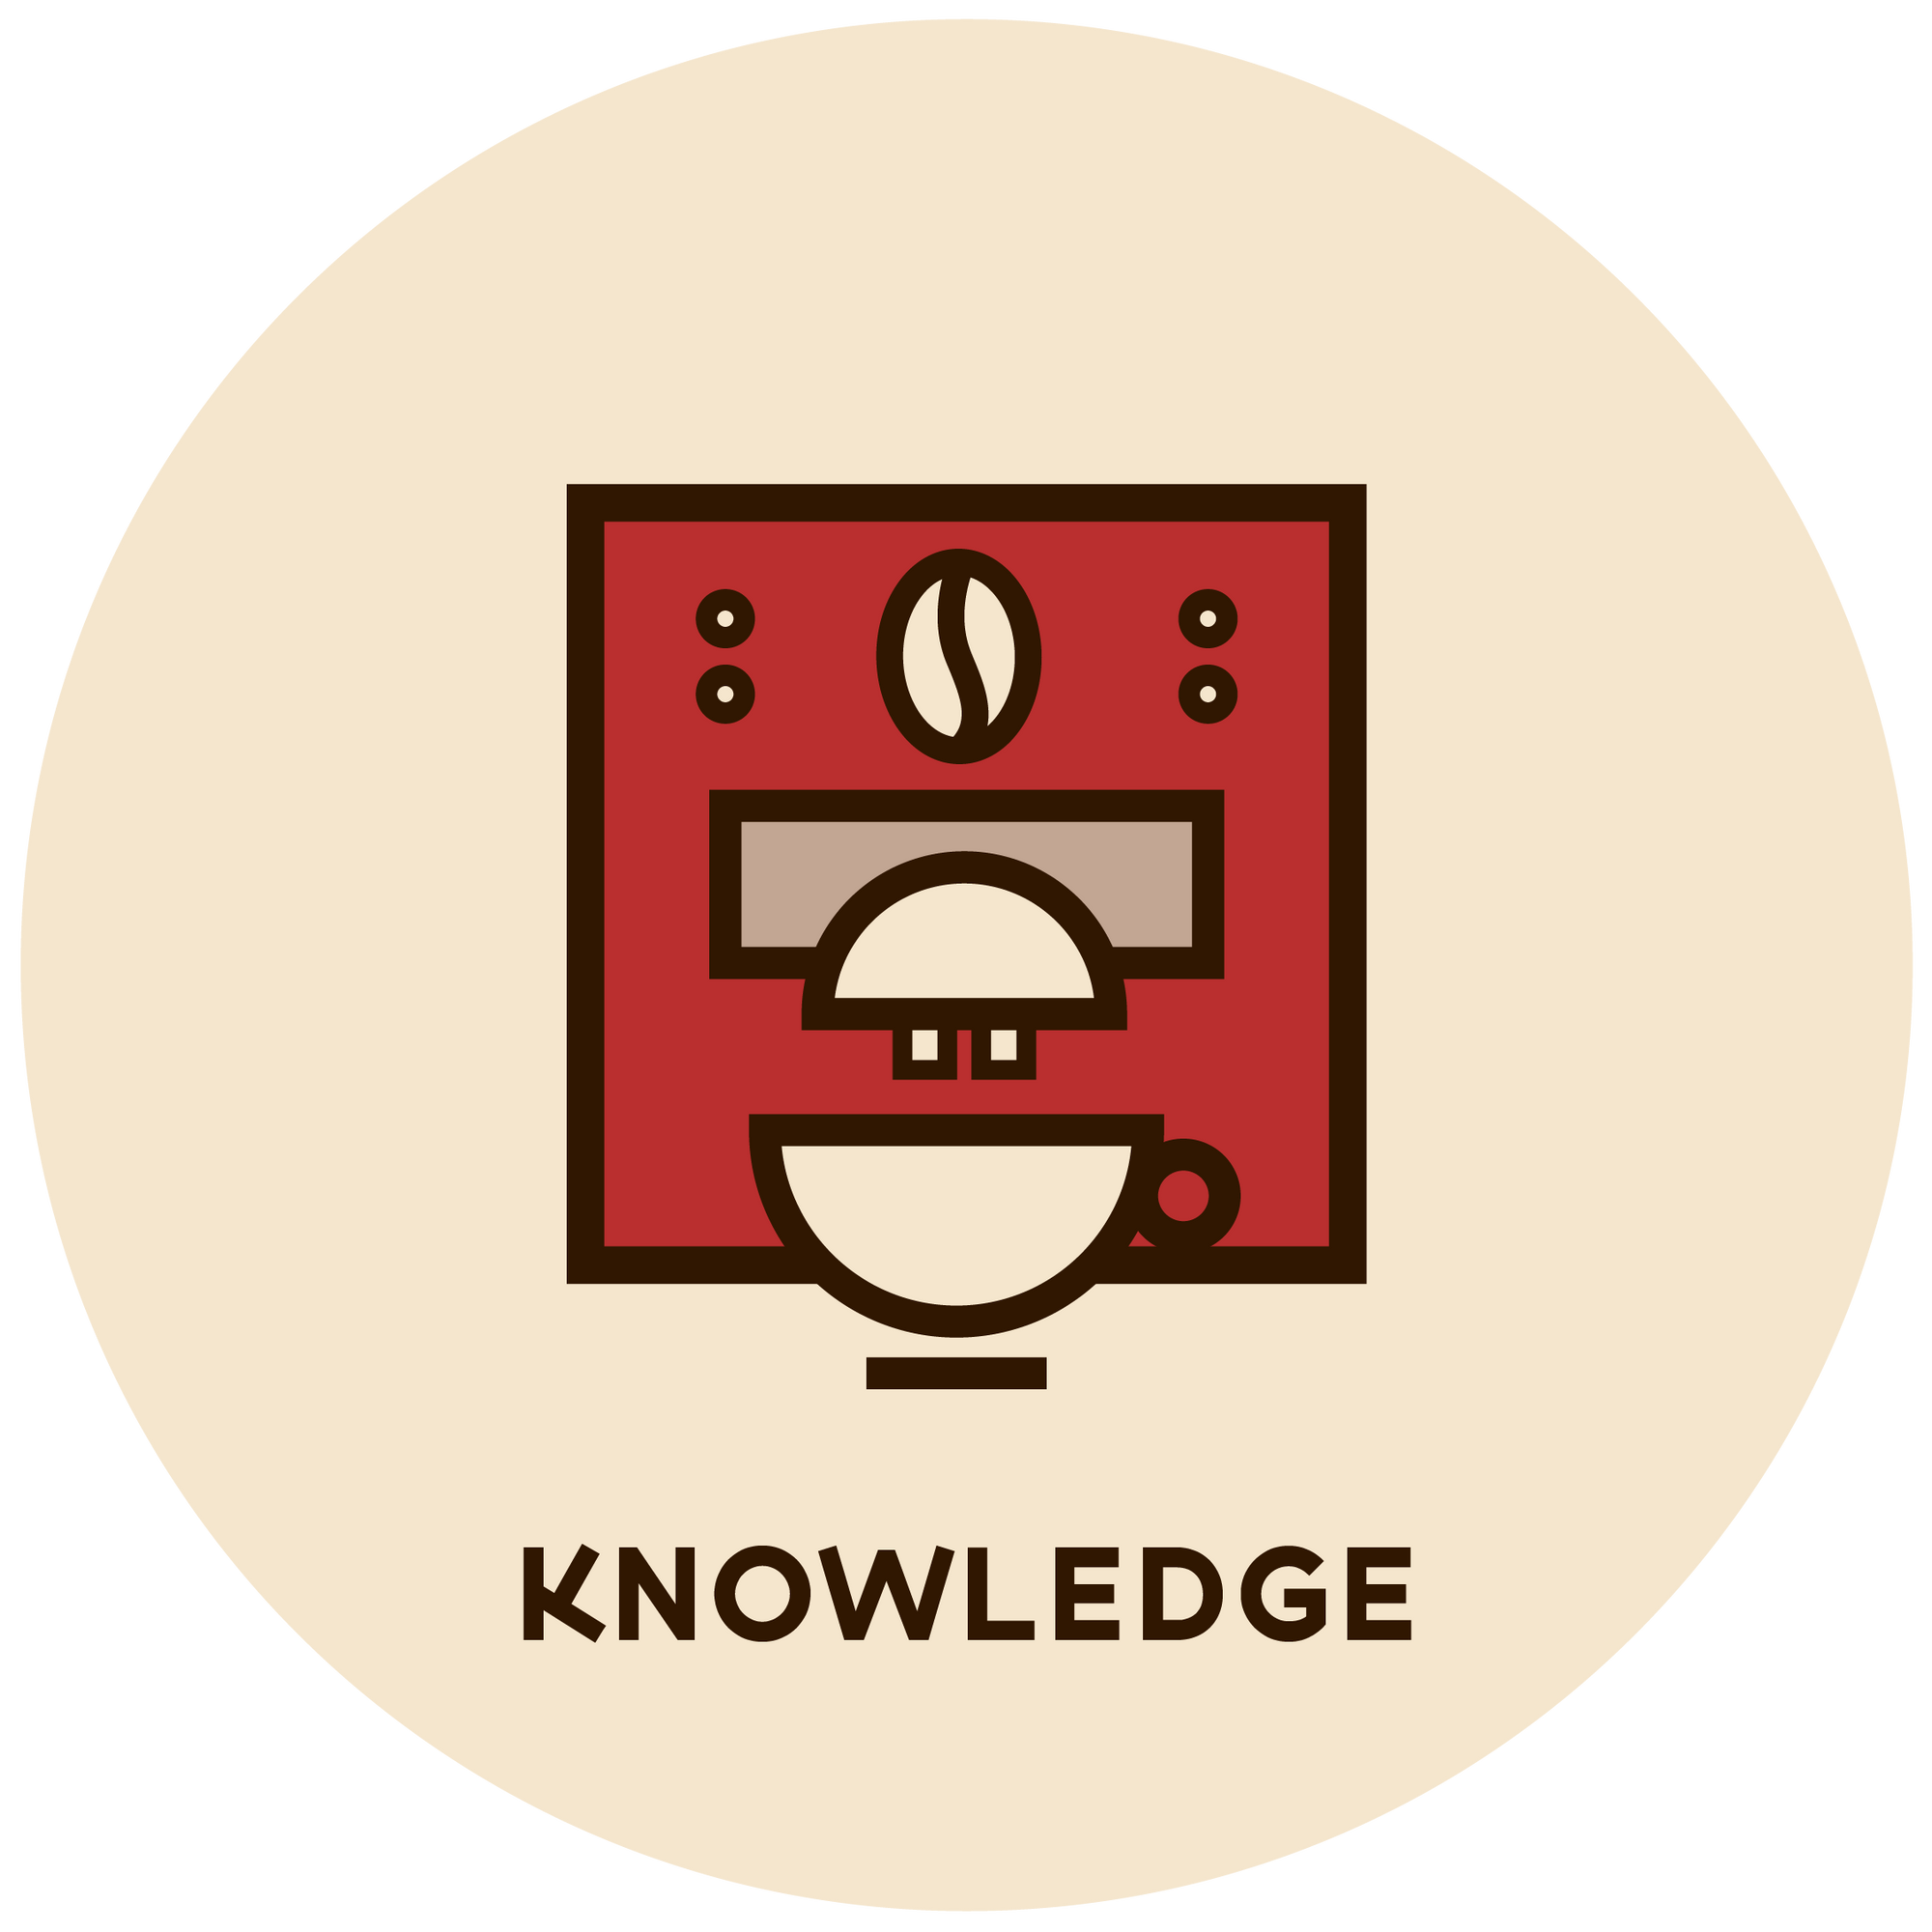 Espresso Canada logo indicating knowledge of espresso machines